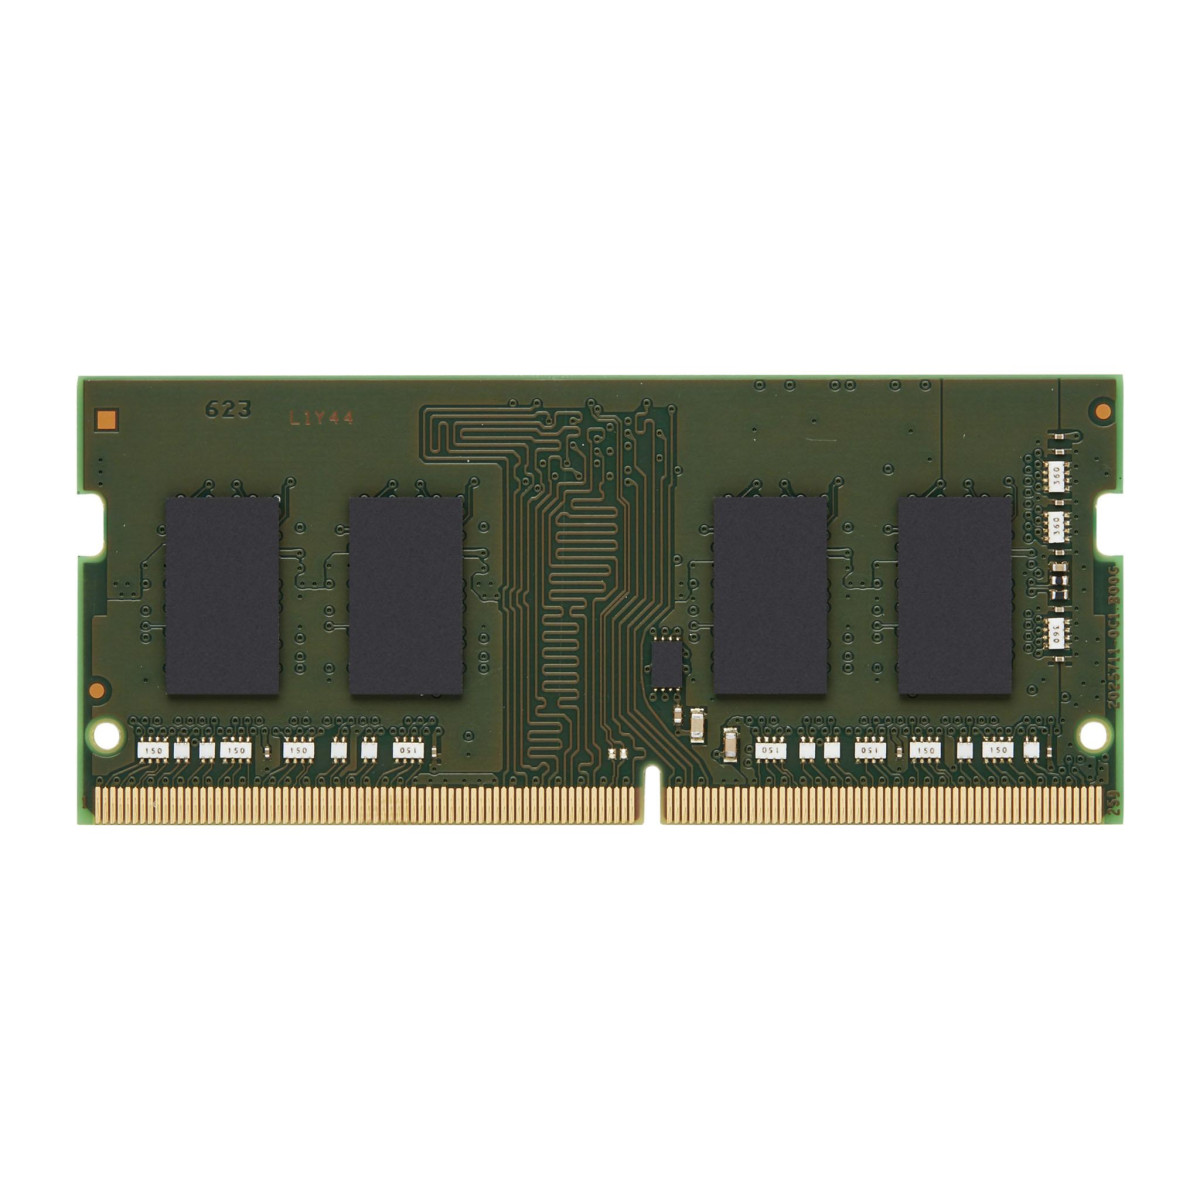 DDR4 2666MHz 8GB Non-ECC CL19 SODIMM